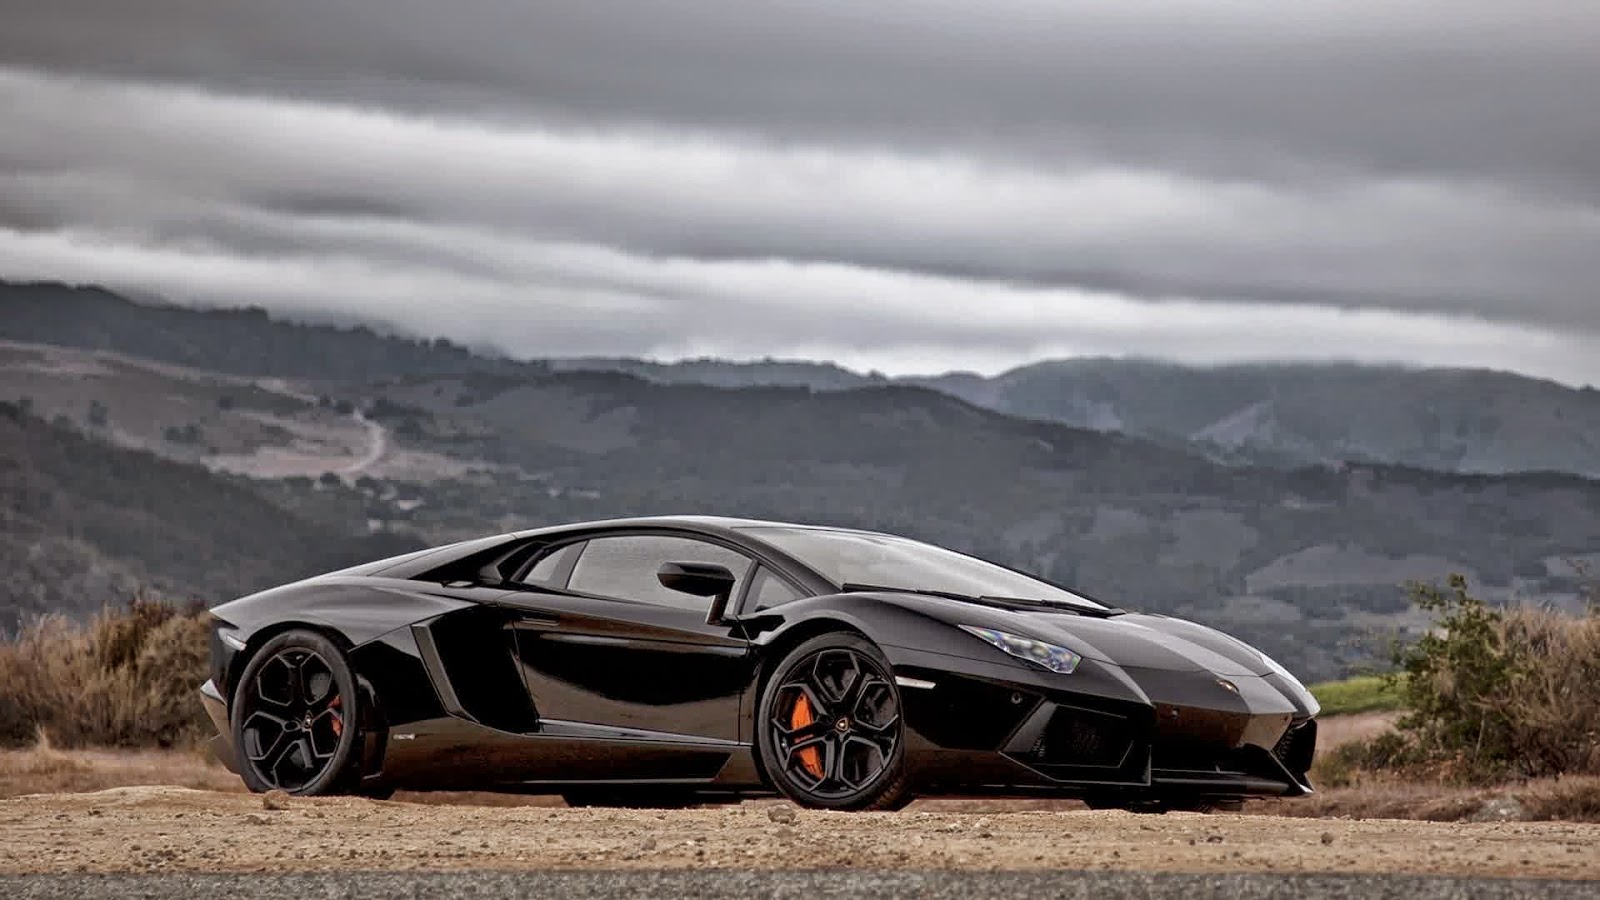 Get 3 Black Lamborghini Aventador Wallpapers On the Mountain